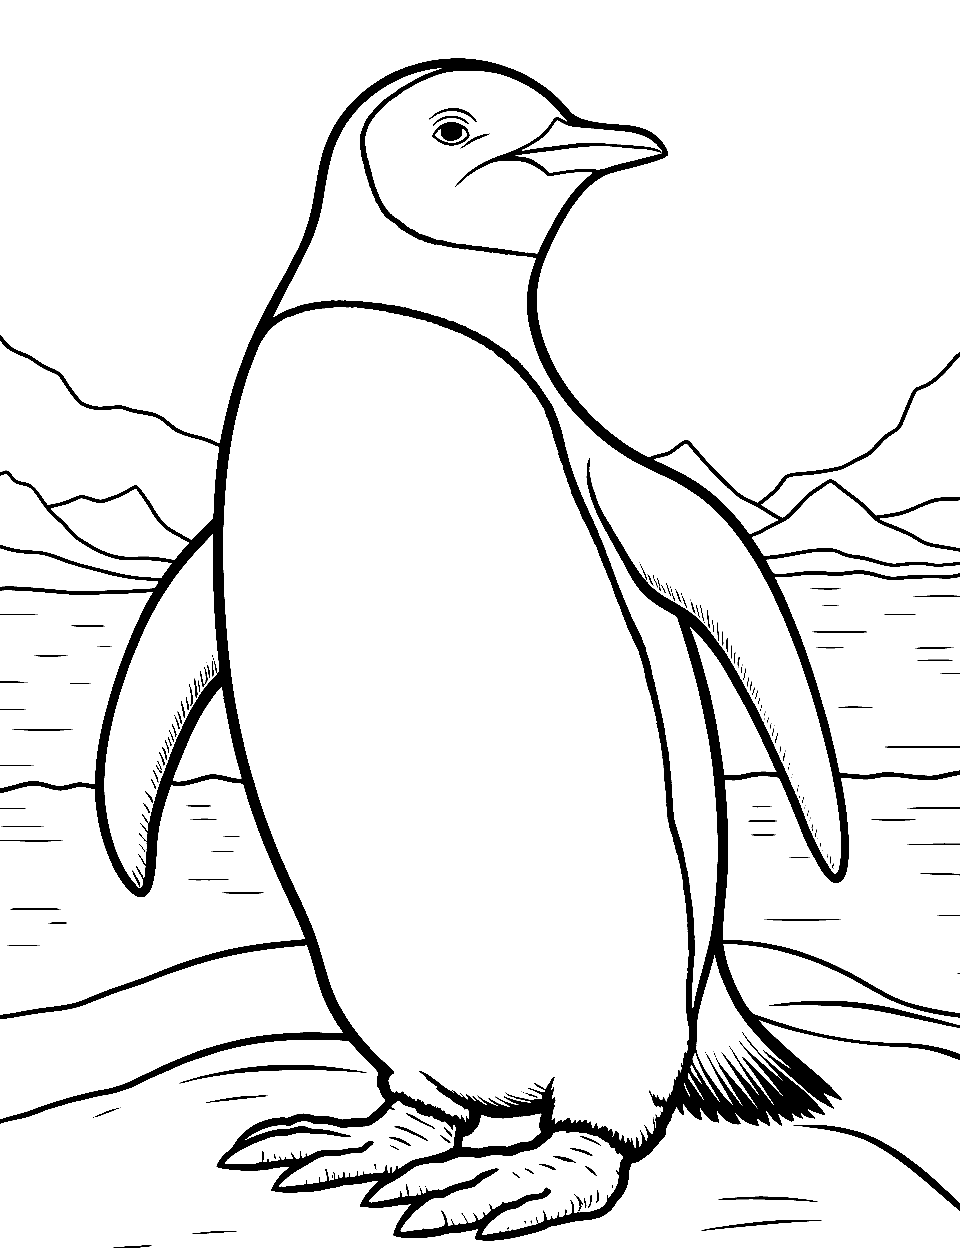 Penguin drawing Stock Photos, Royalty Free Penguin drawing Images |  Depositphotos